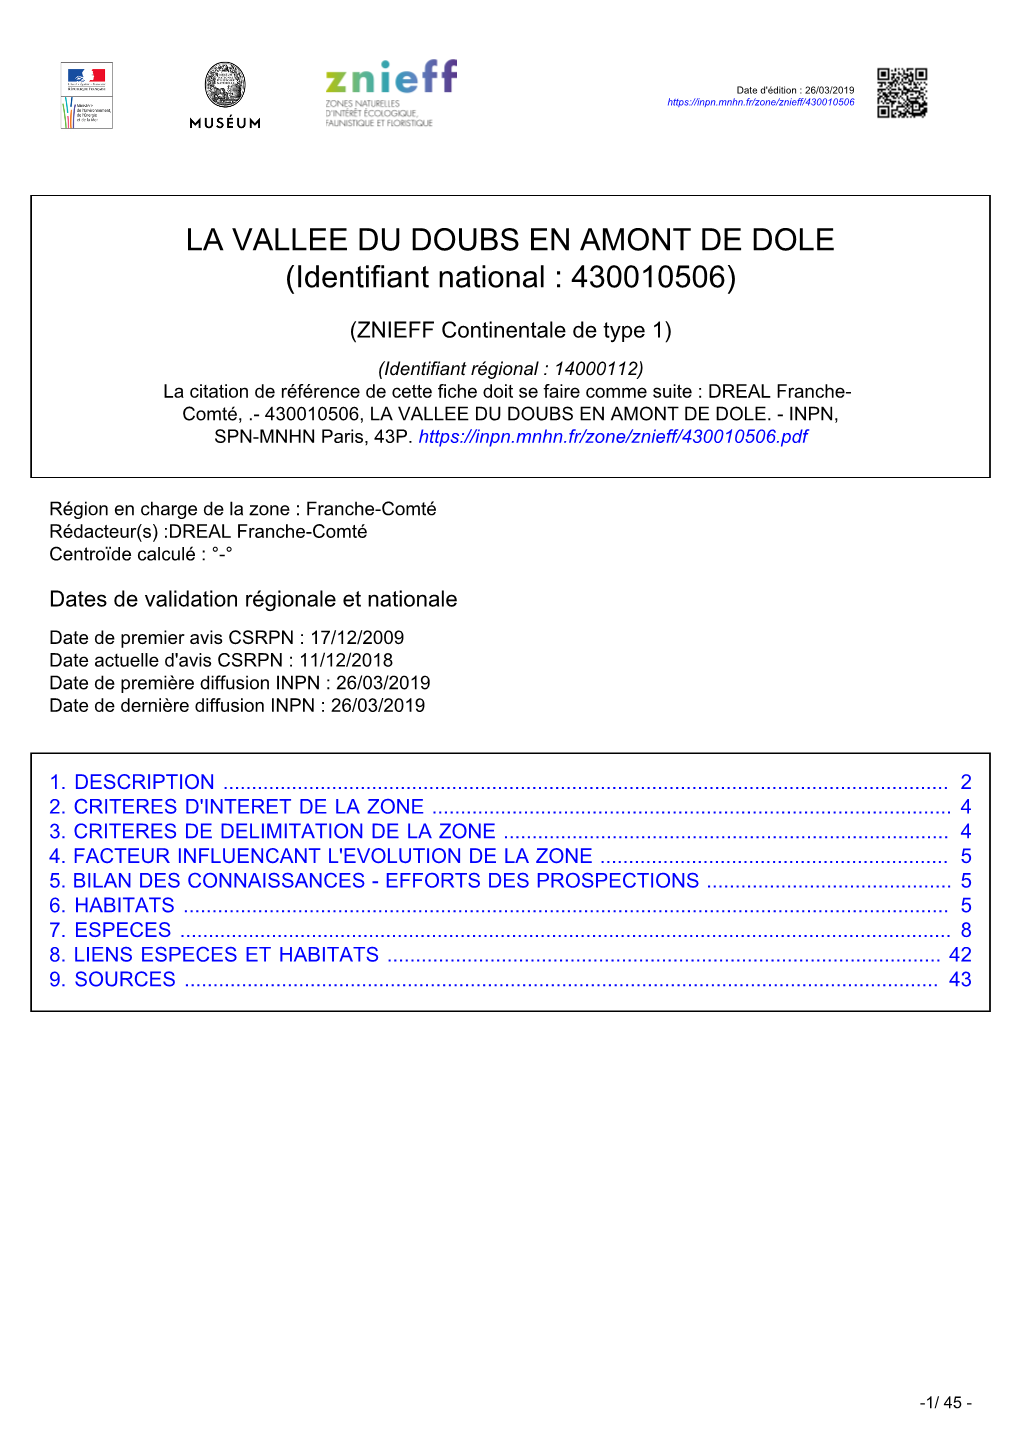 LA VALLEE DU DOUBS EN AMONT DE DOLE (Identifiant National : 430010506)